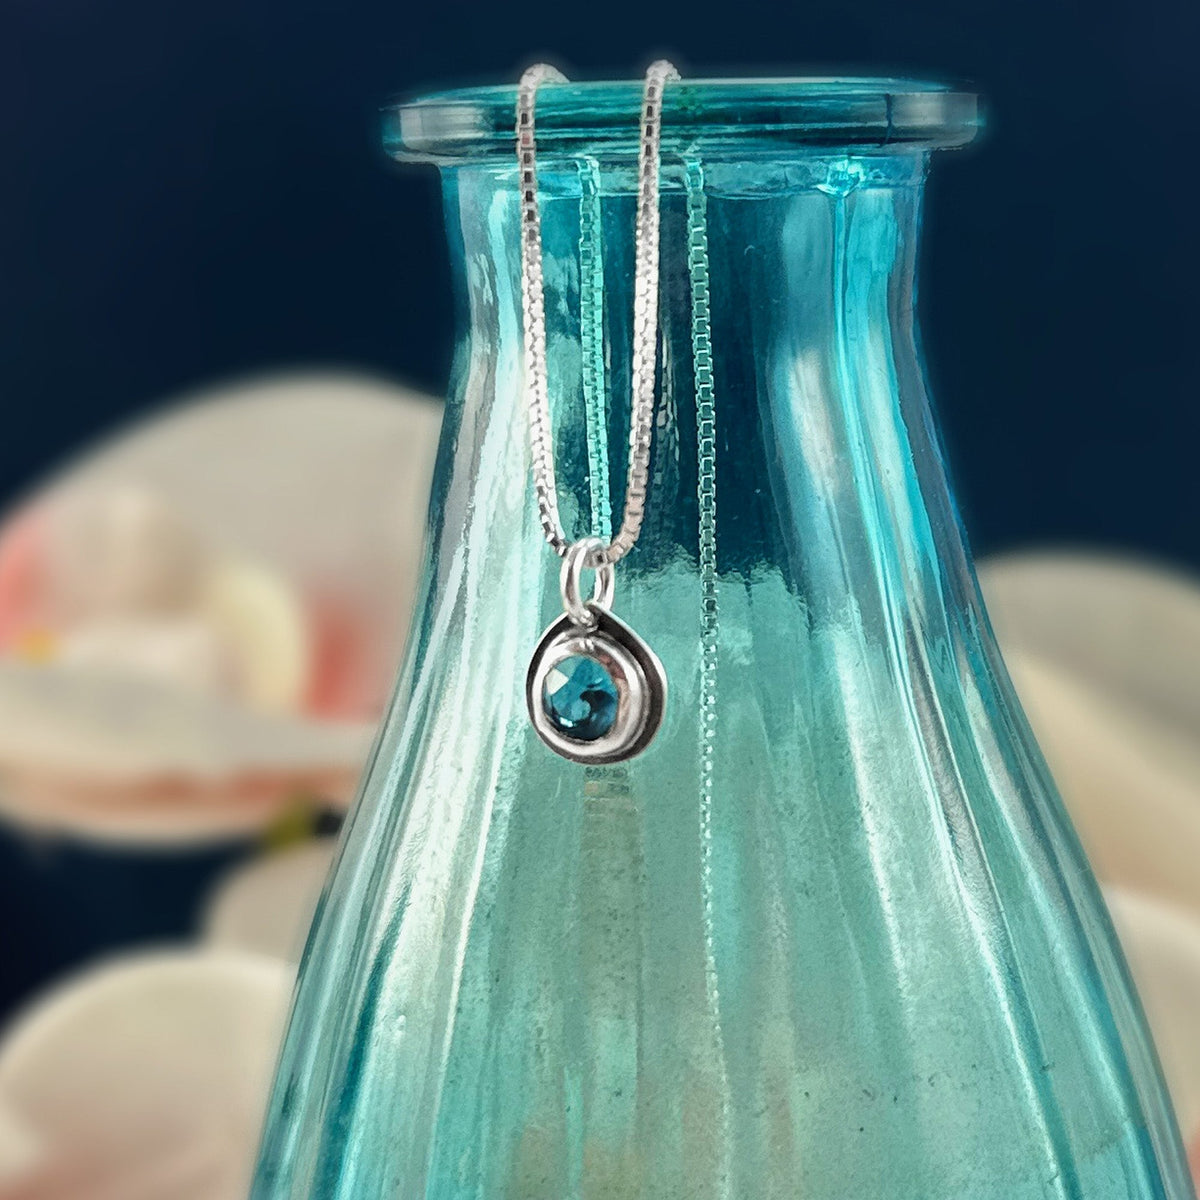 Blue Topaz Wave Drop Pendant No. 1 - Silver Pendant   7189 - handmade by Beth Millner Jewelry